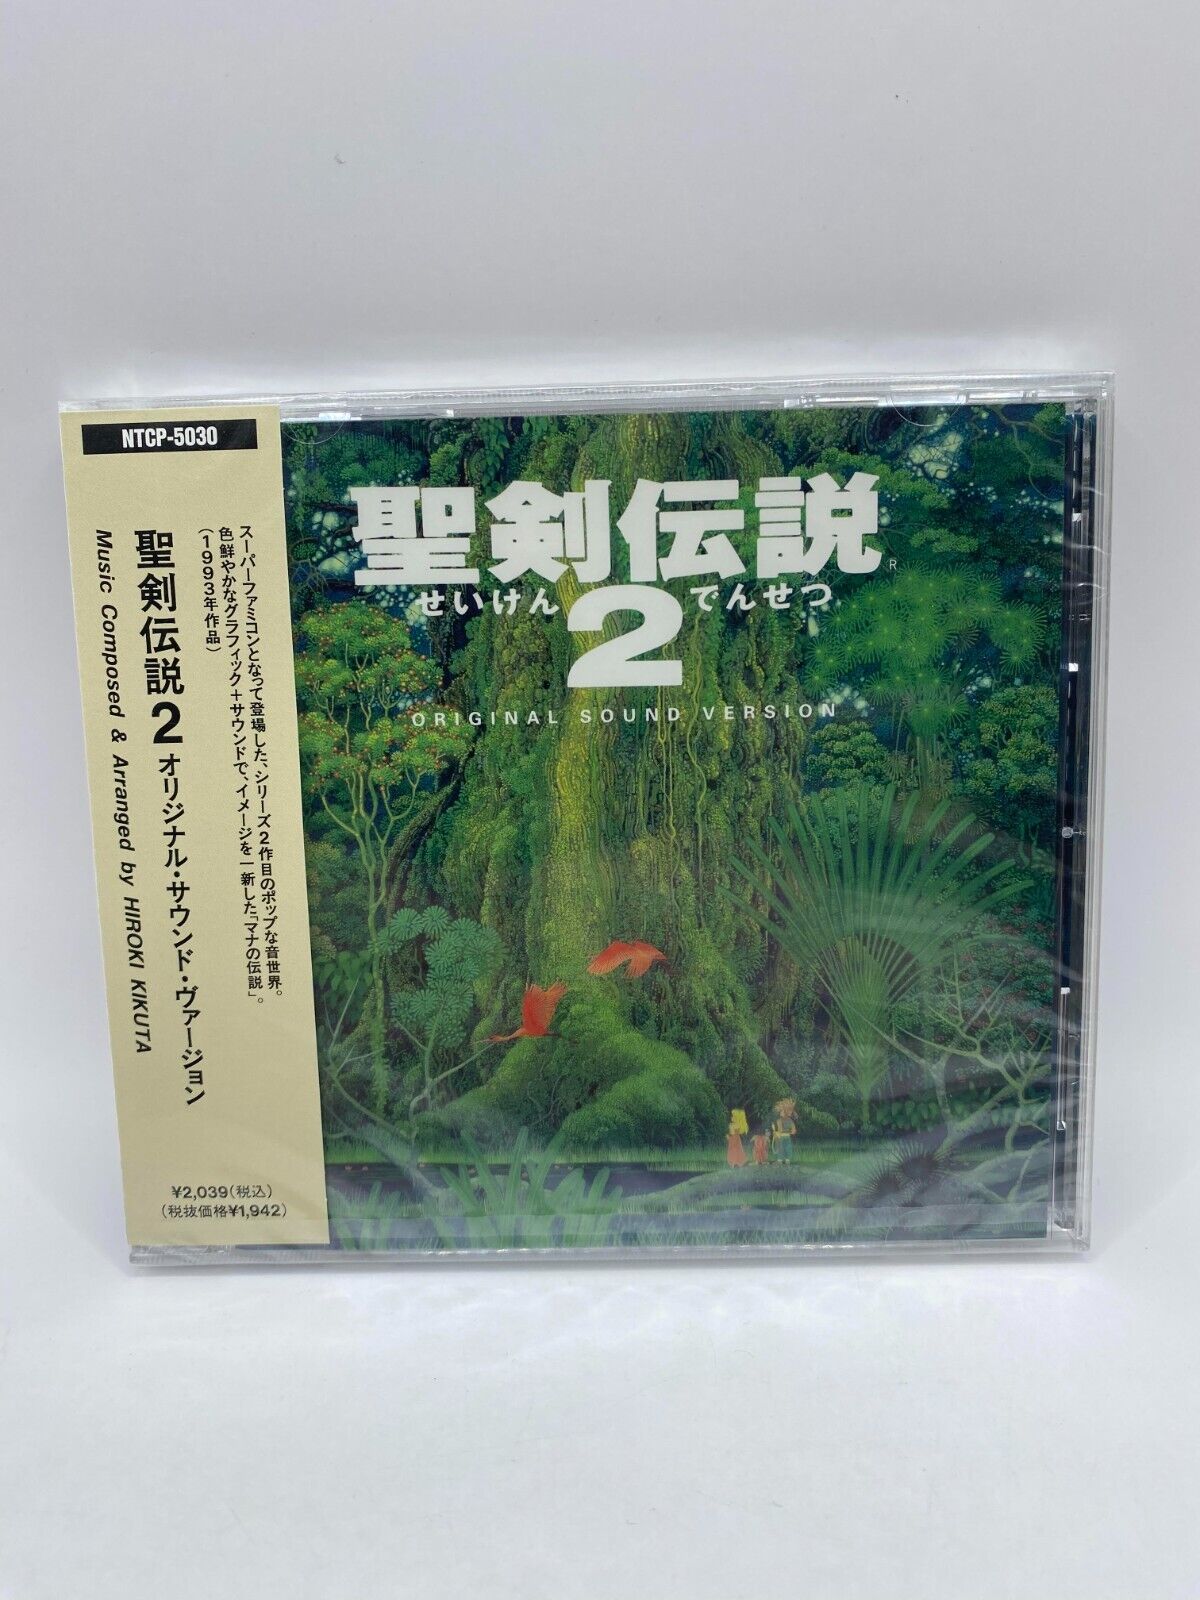 Seiken Densetsu Legend of Mana SOUNDTRACK CD Music 2 Holy sword NEW SEALED